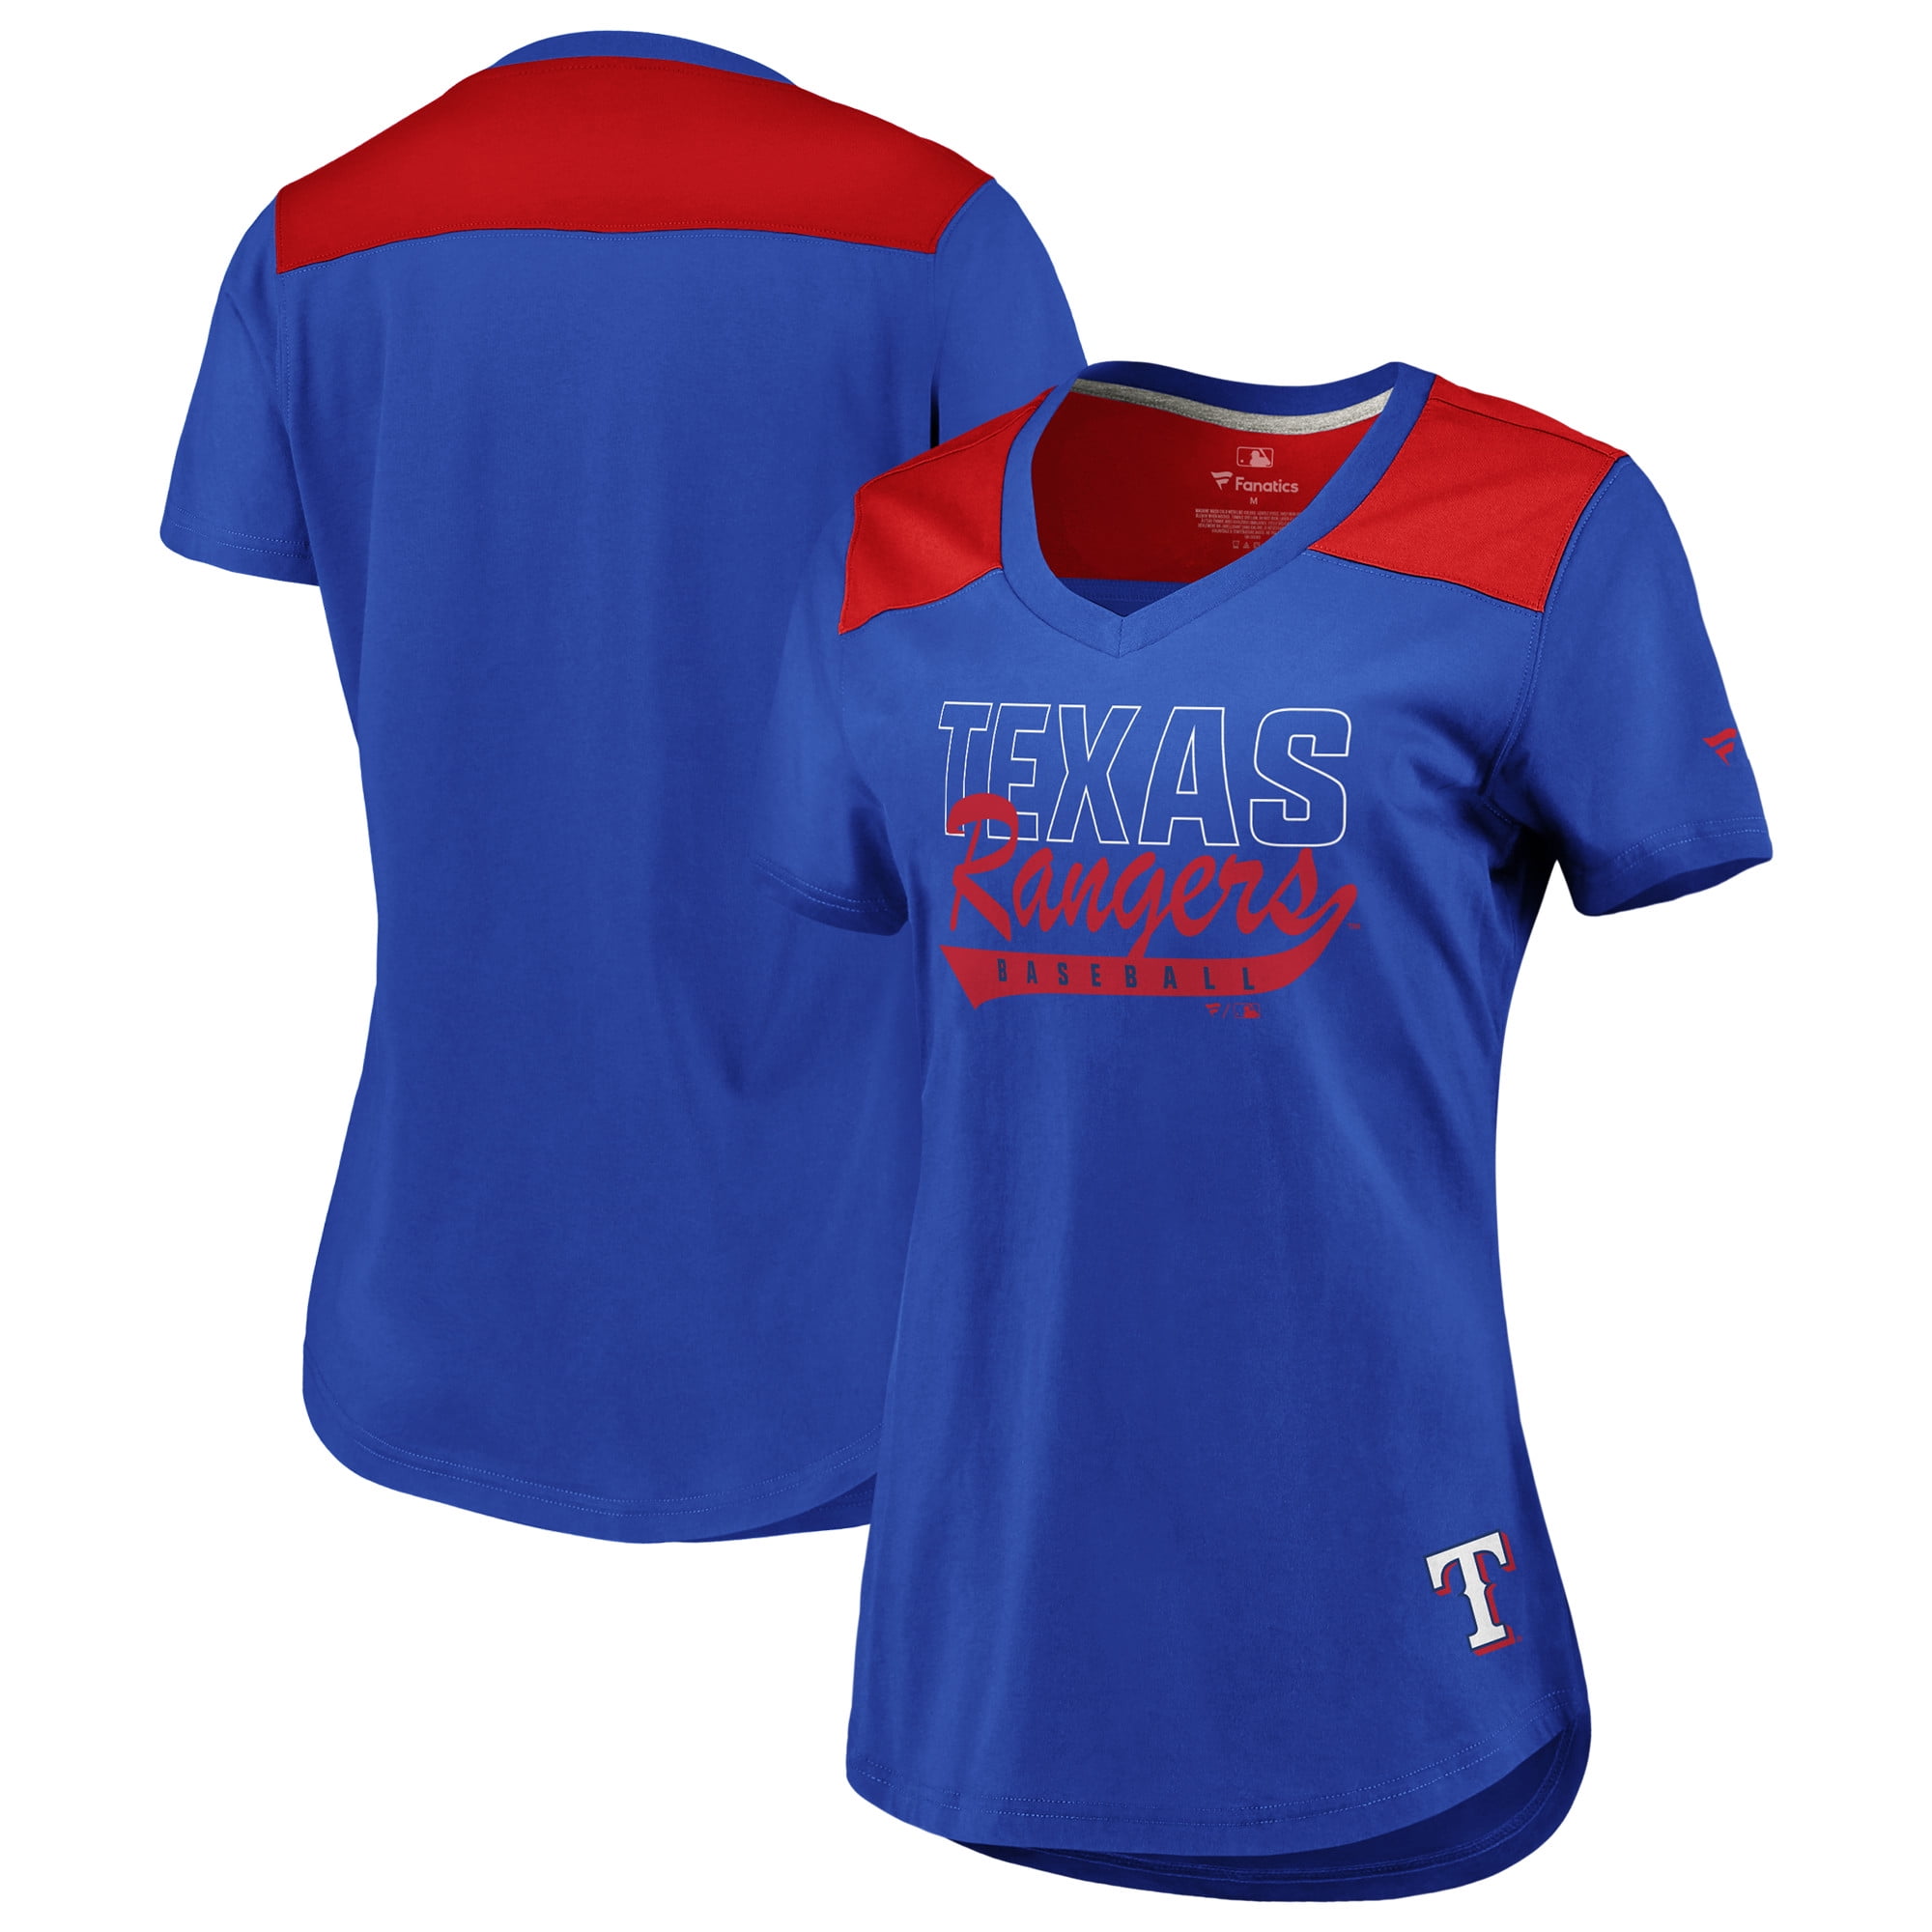 new texas rangers t shirts